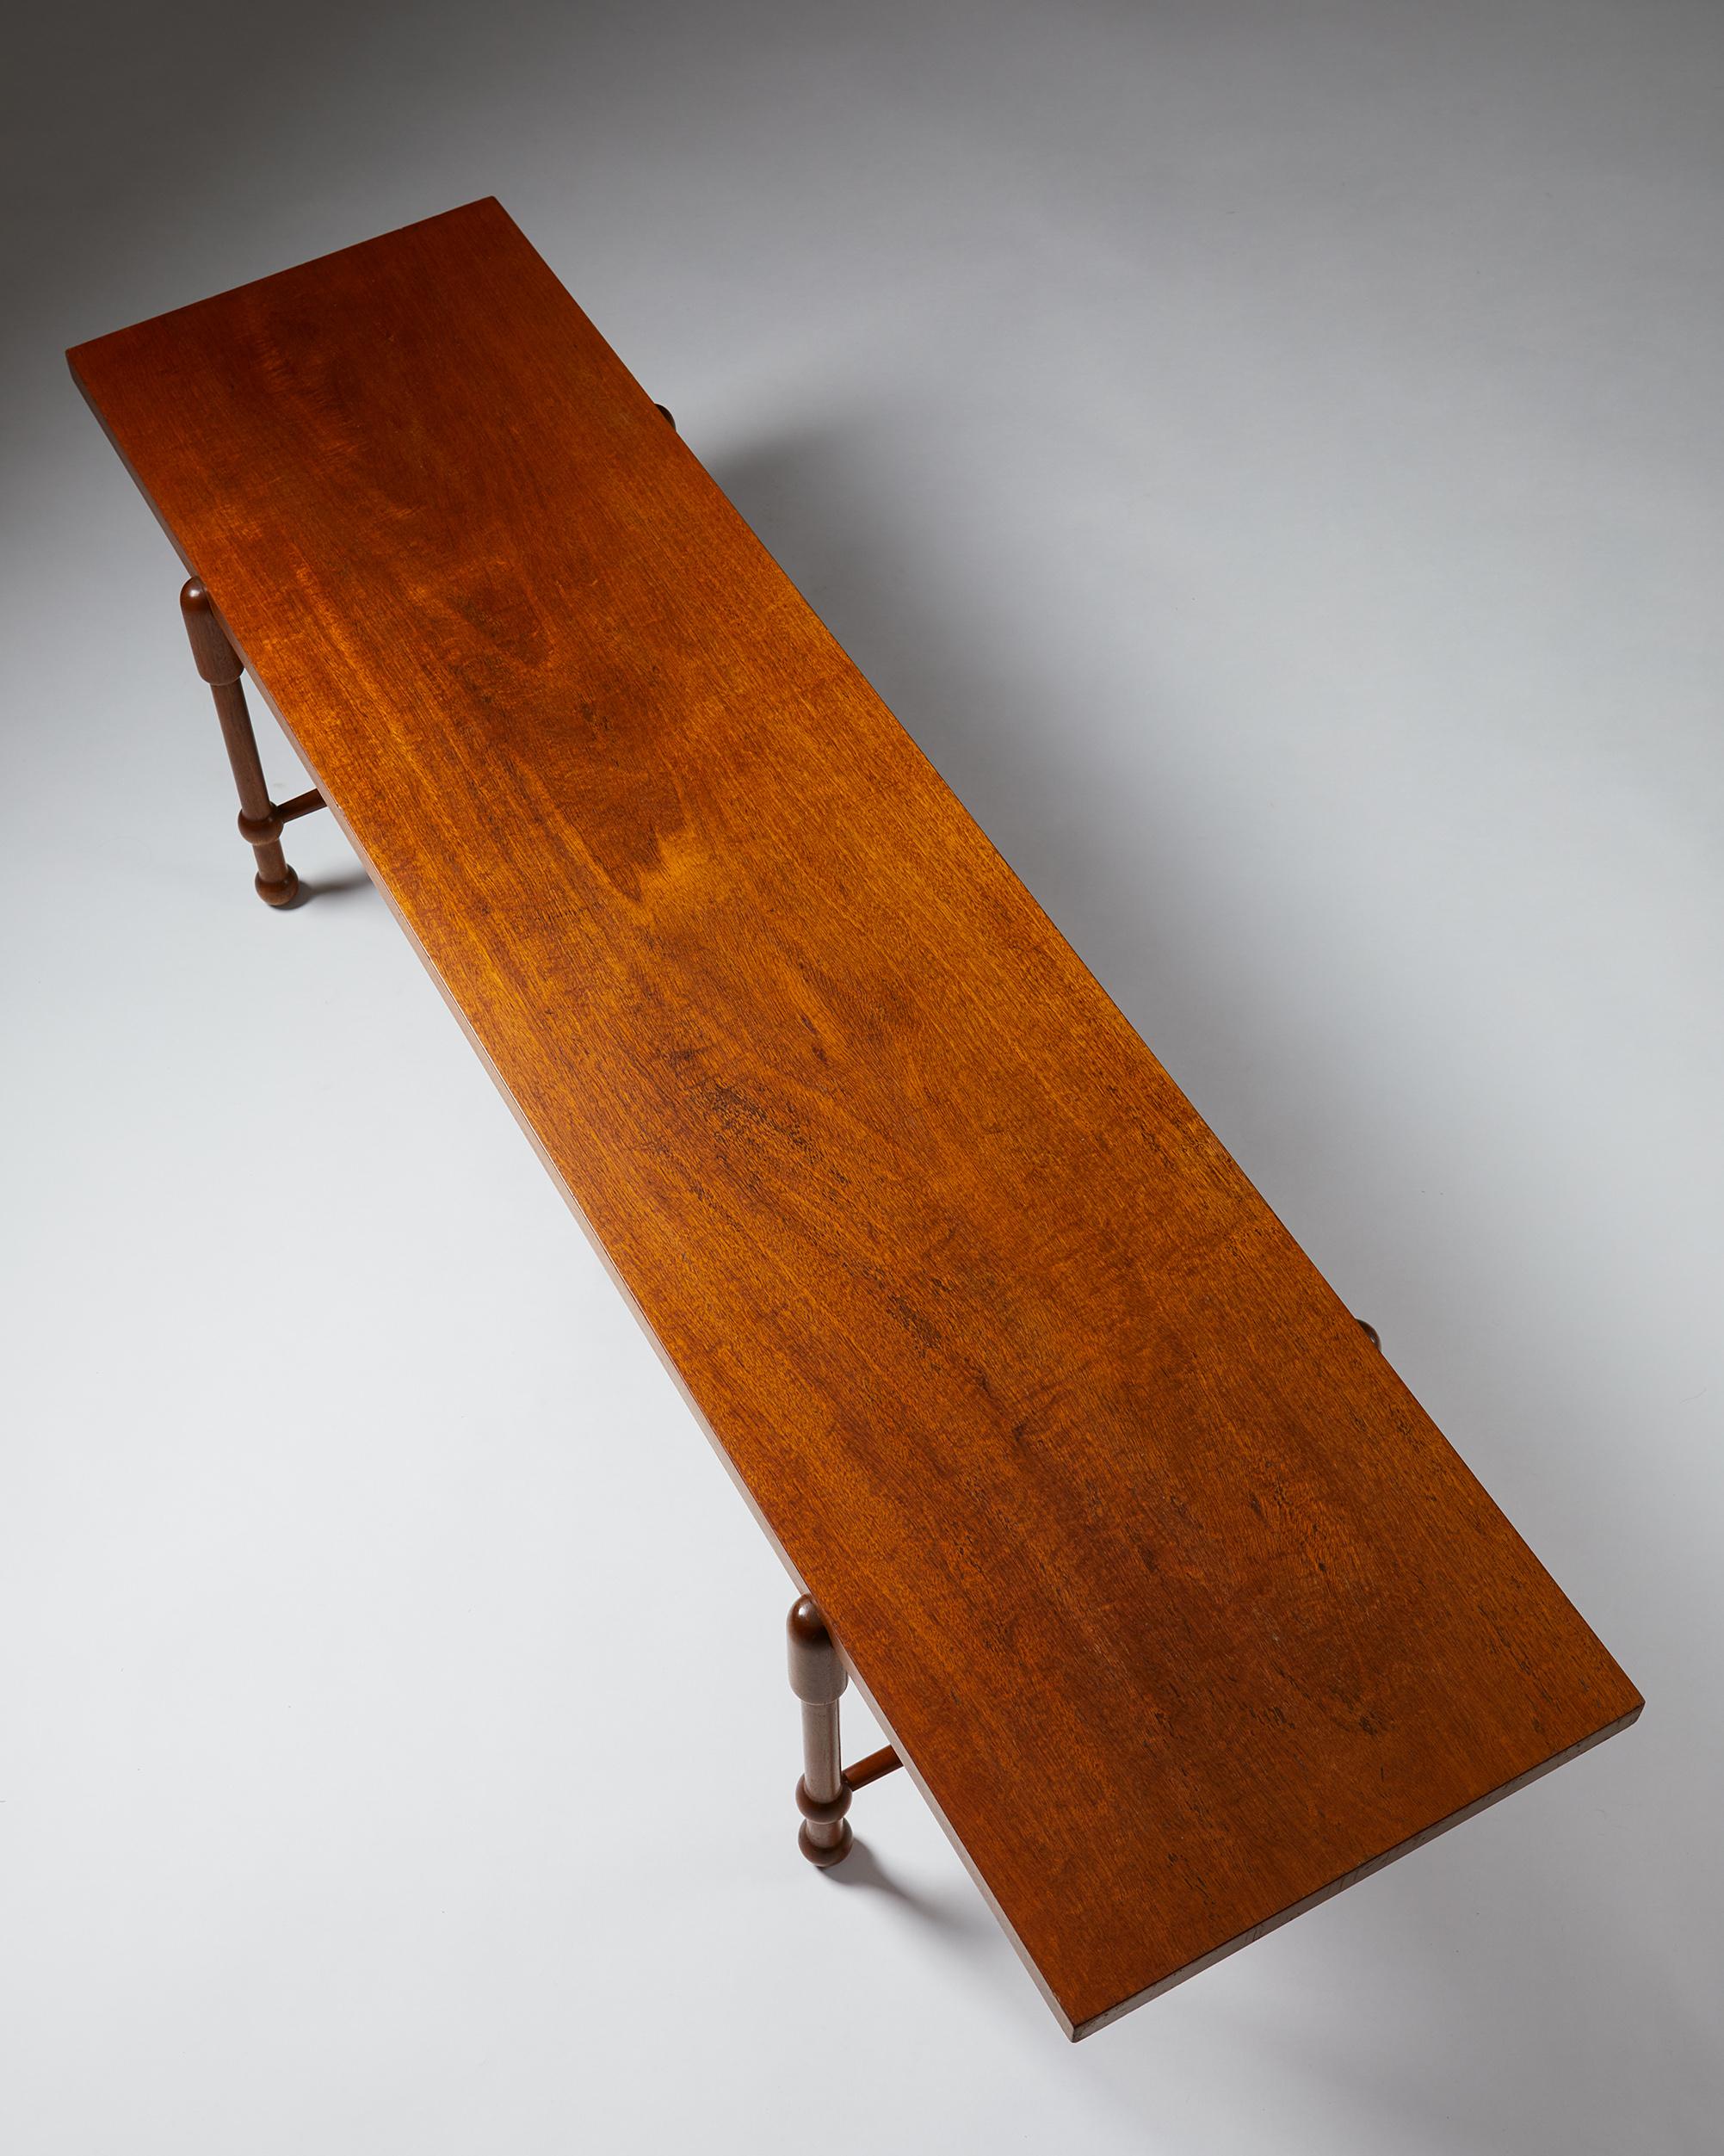 Mahogany Occasional Table Model 2180 Designed by Josef Frank for Svenskt Tenn, Sweden